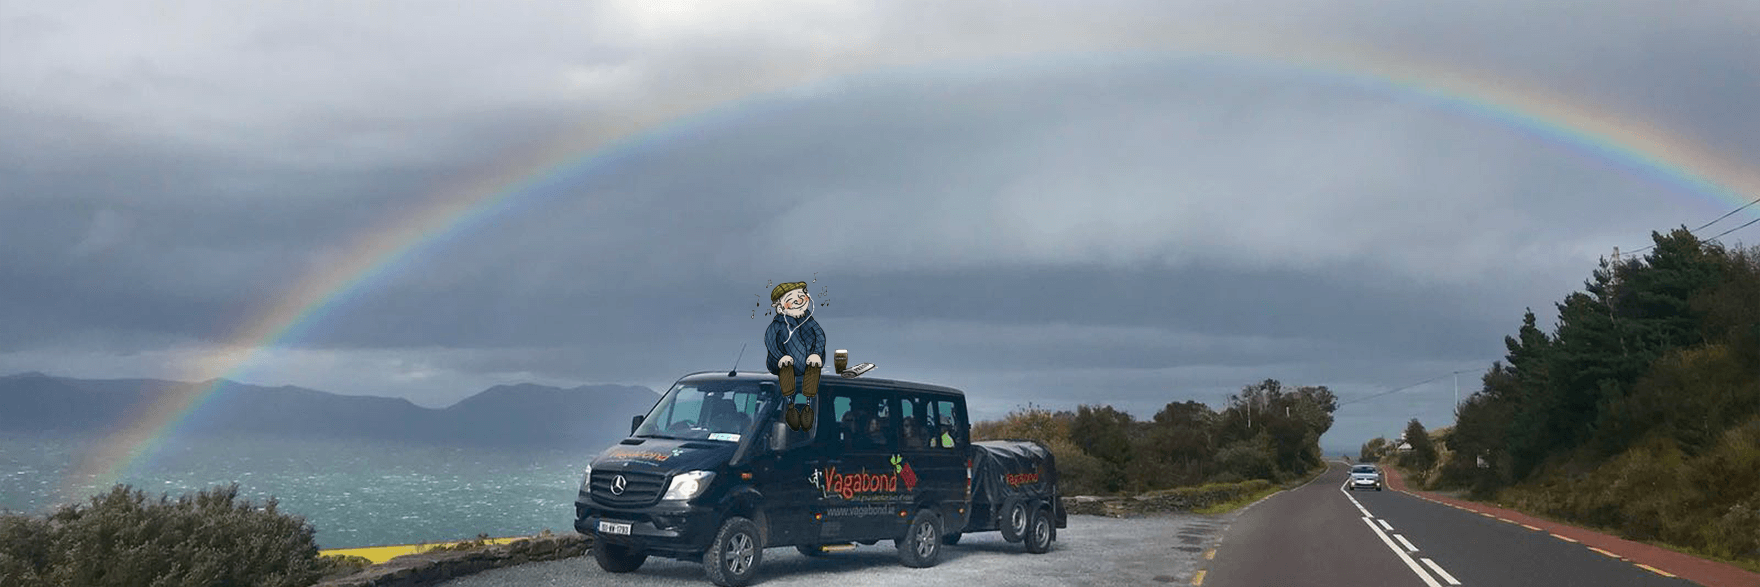 An animated small leprechaun sitting on top of a Vagabond tour vehicle under a rainbow